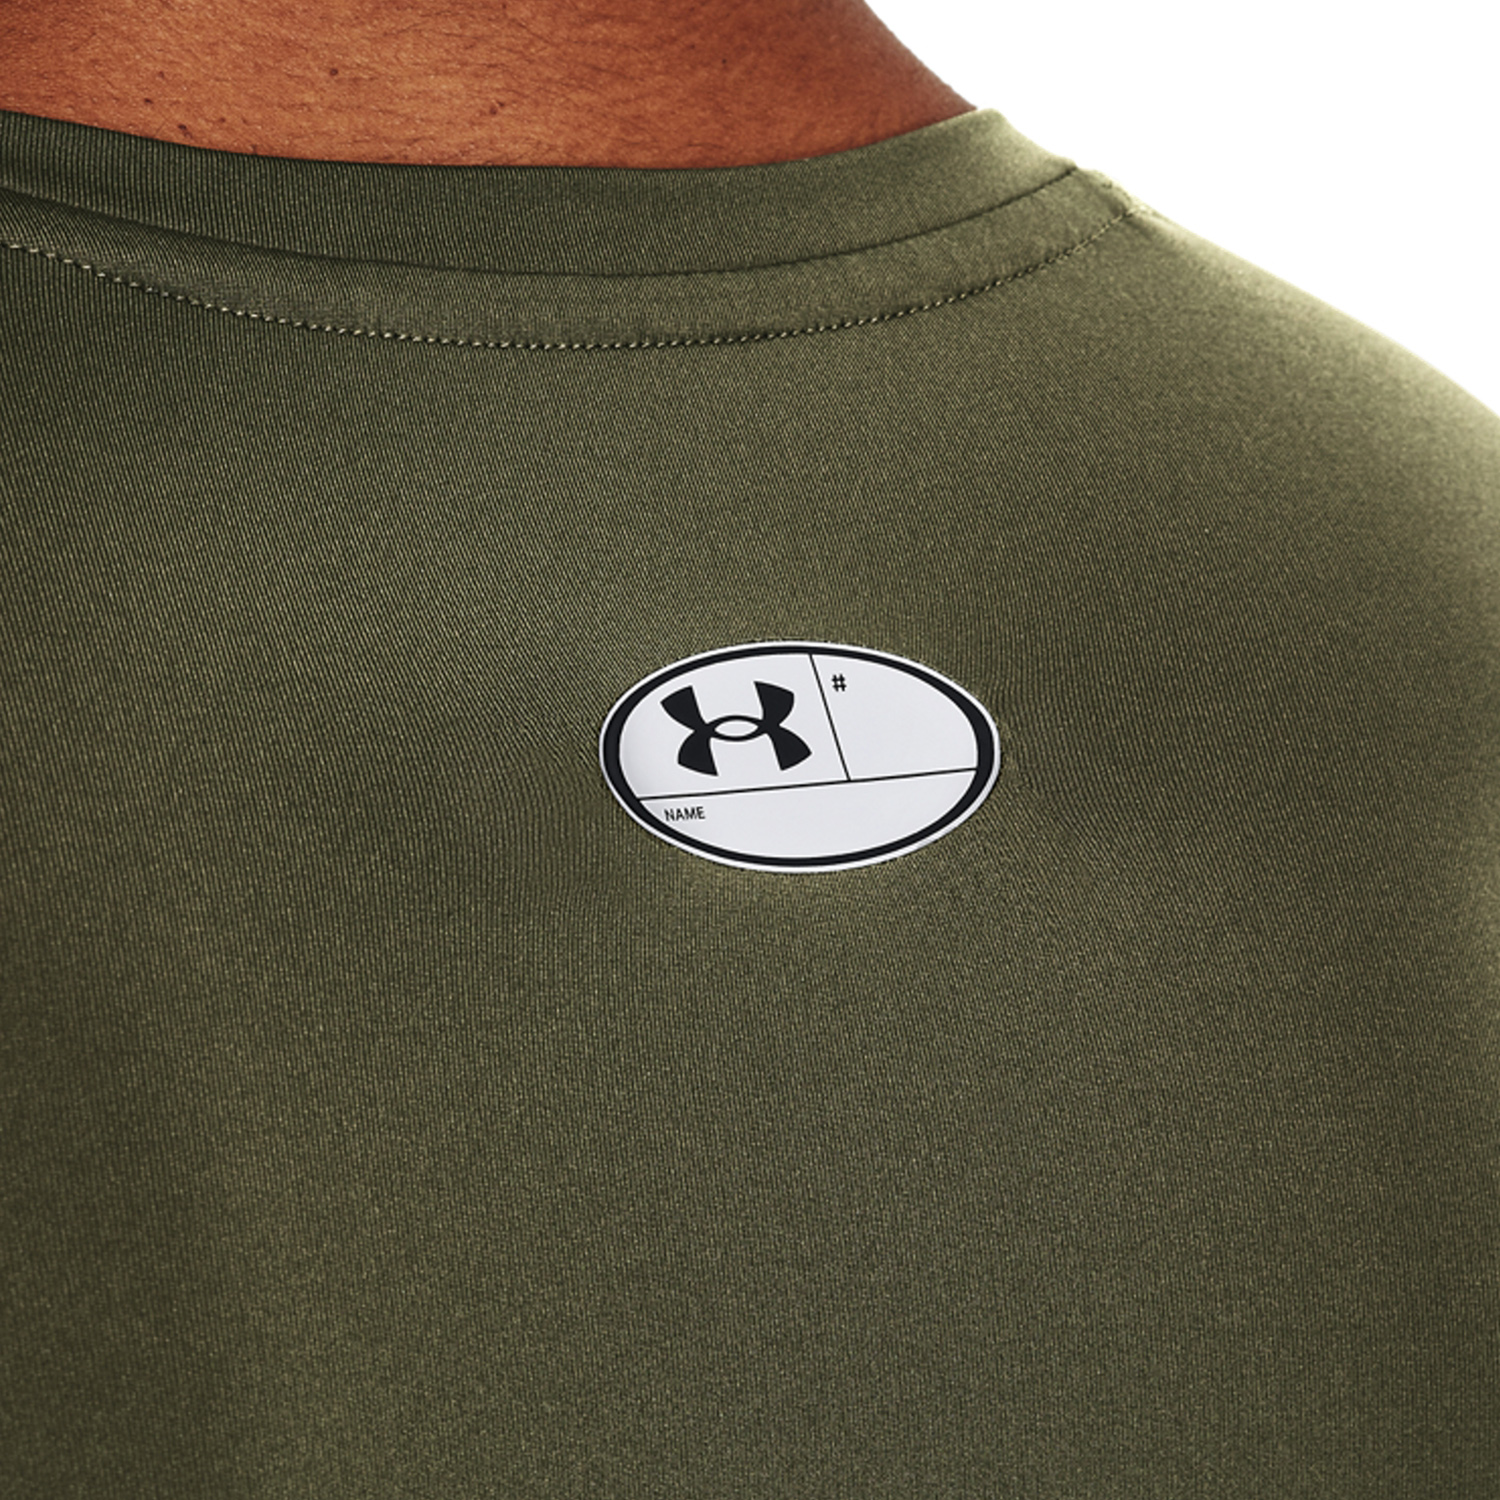 Under Armour HeatGear Compression Shirt - Marine Od Green/White